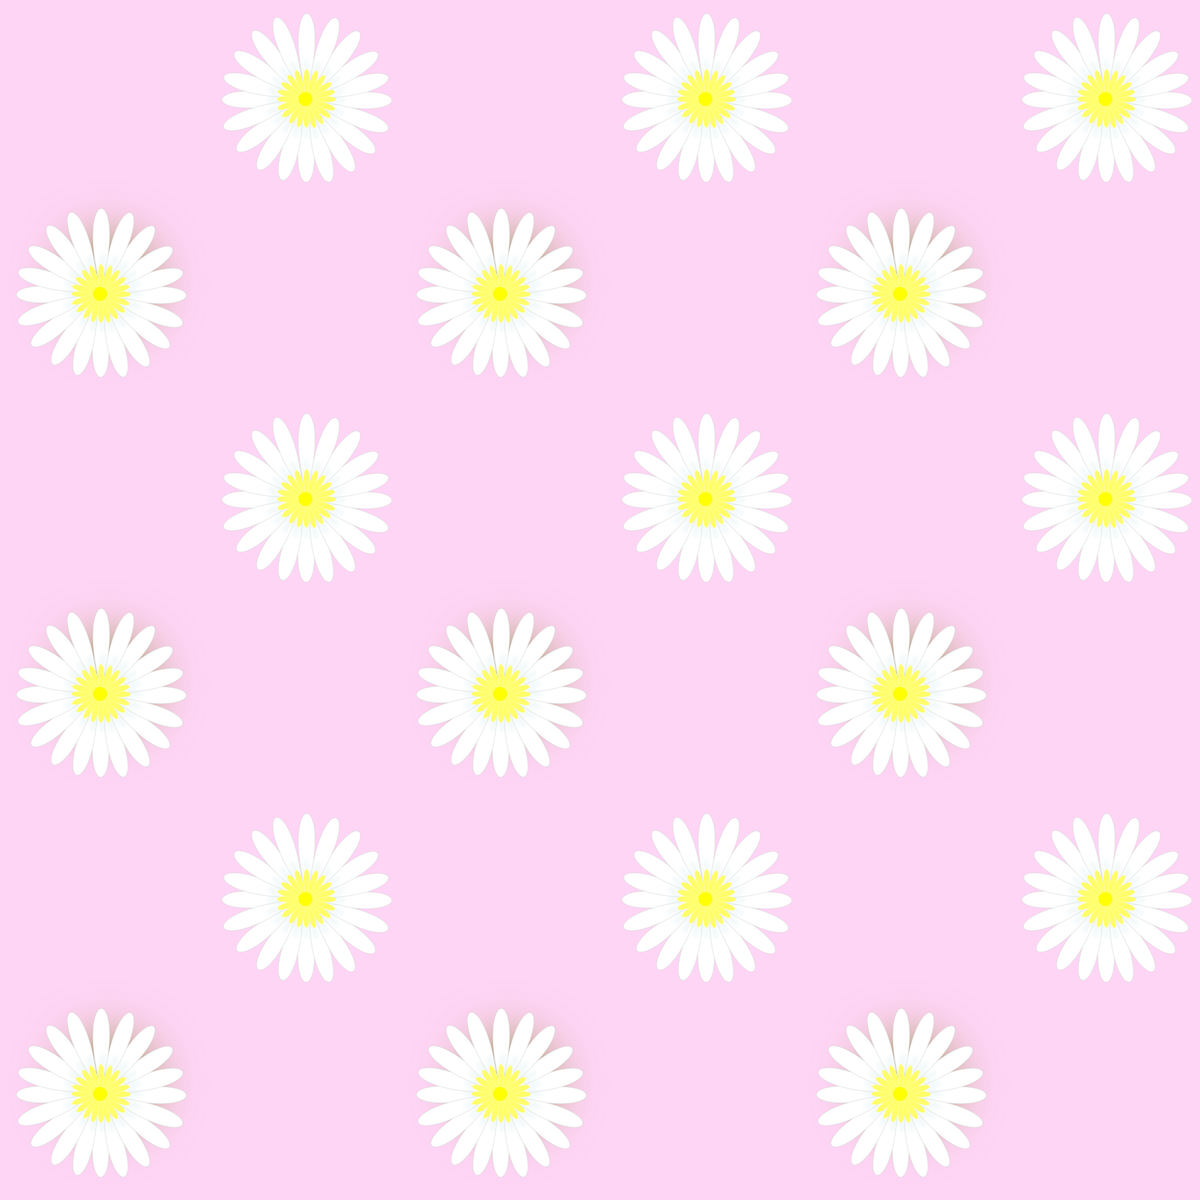 Free digital daisy flower scrapbooking papers